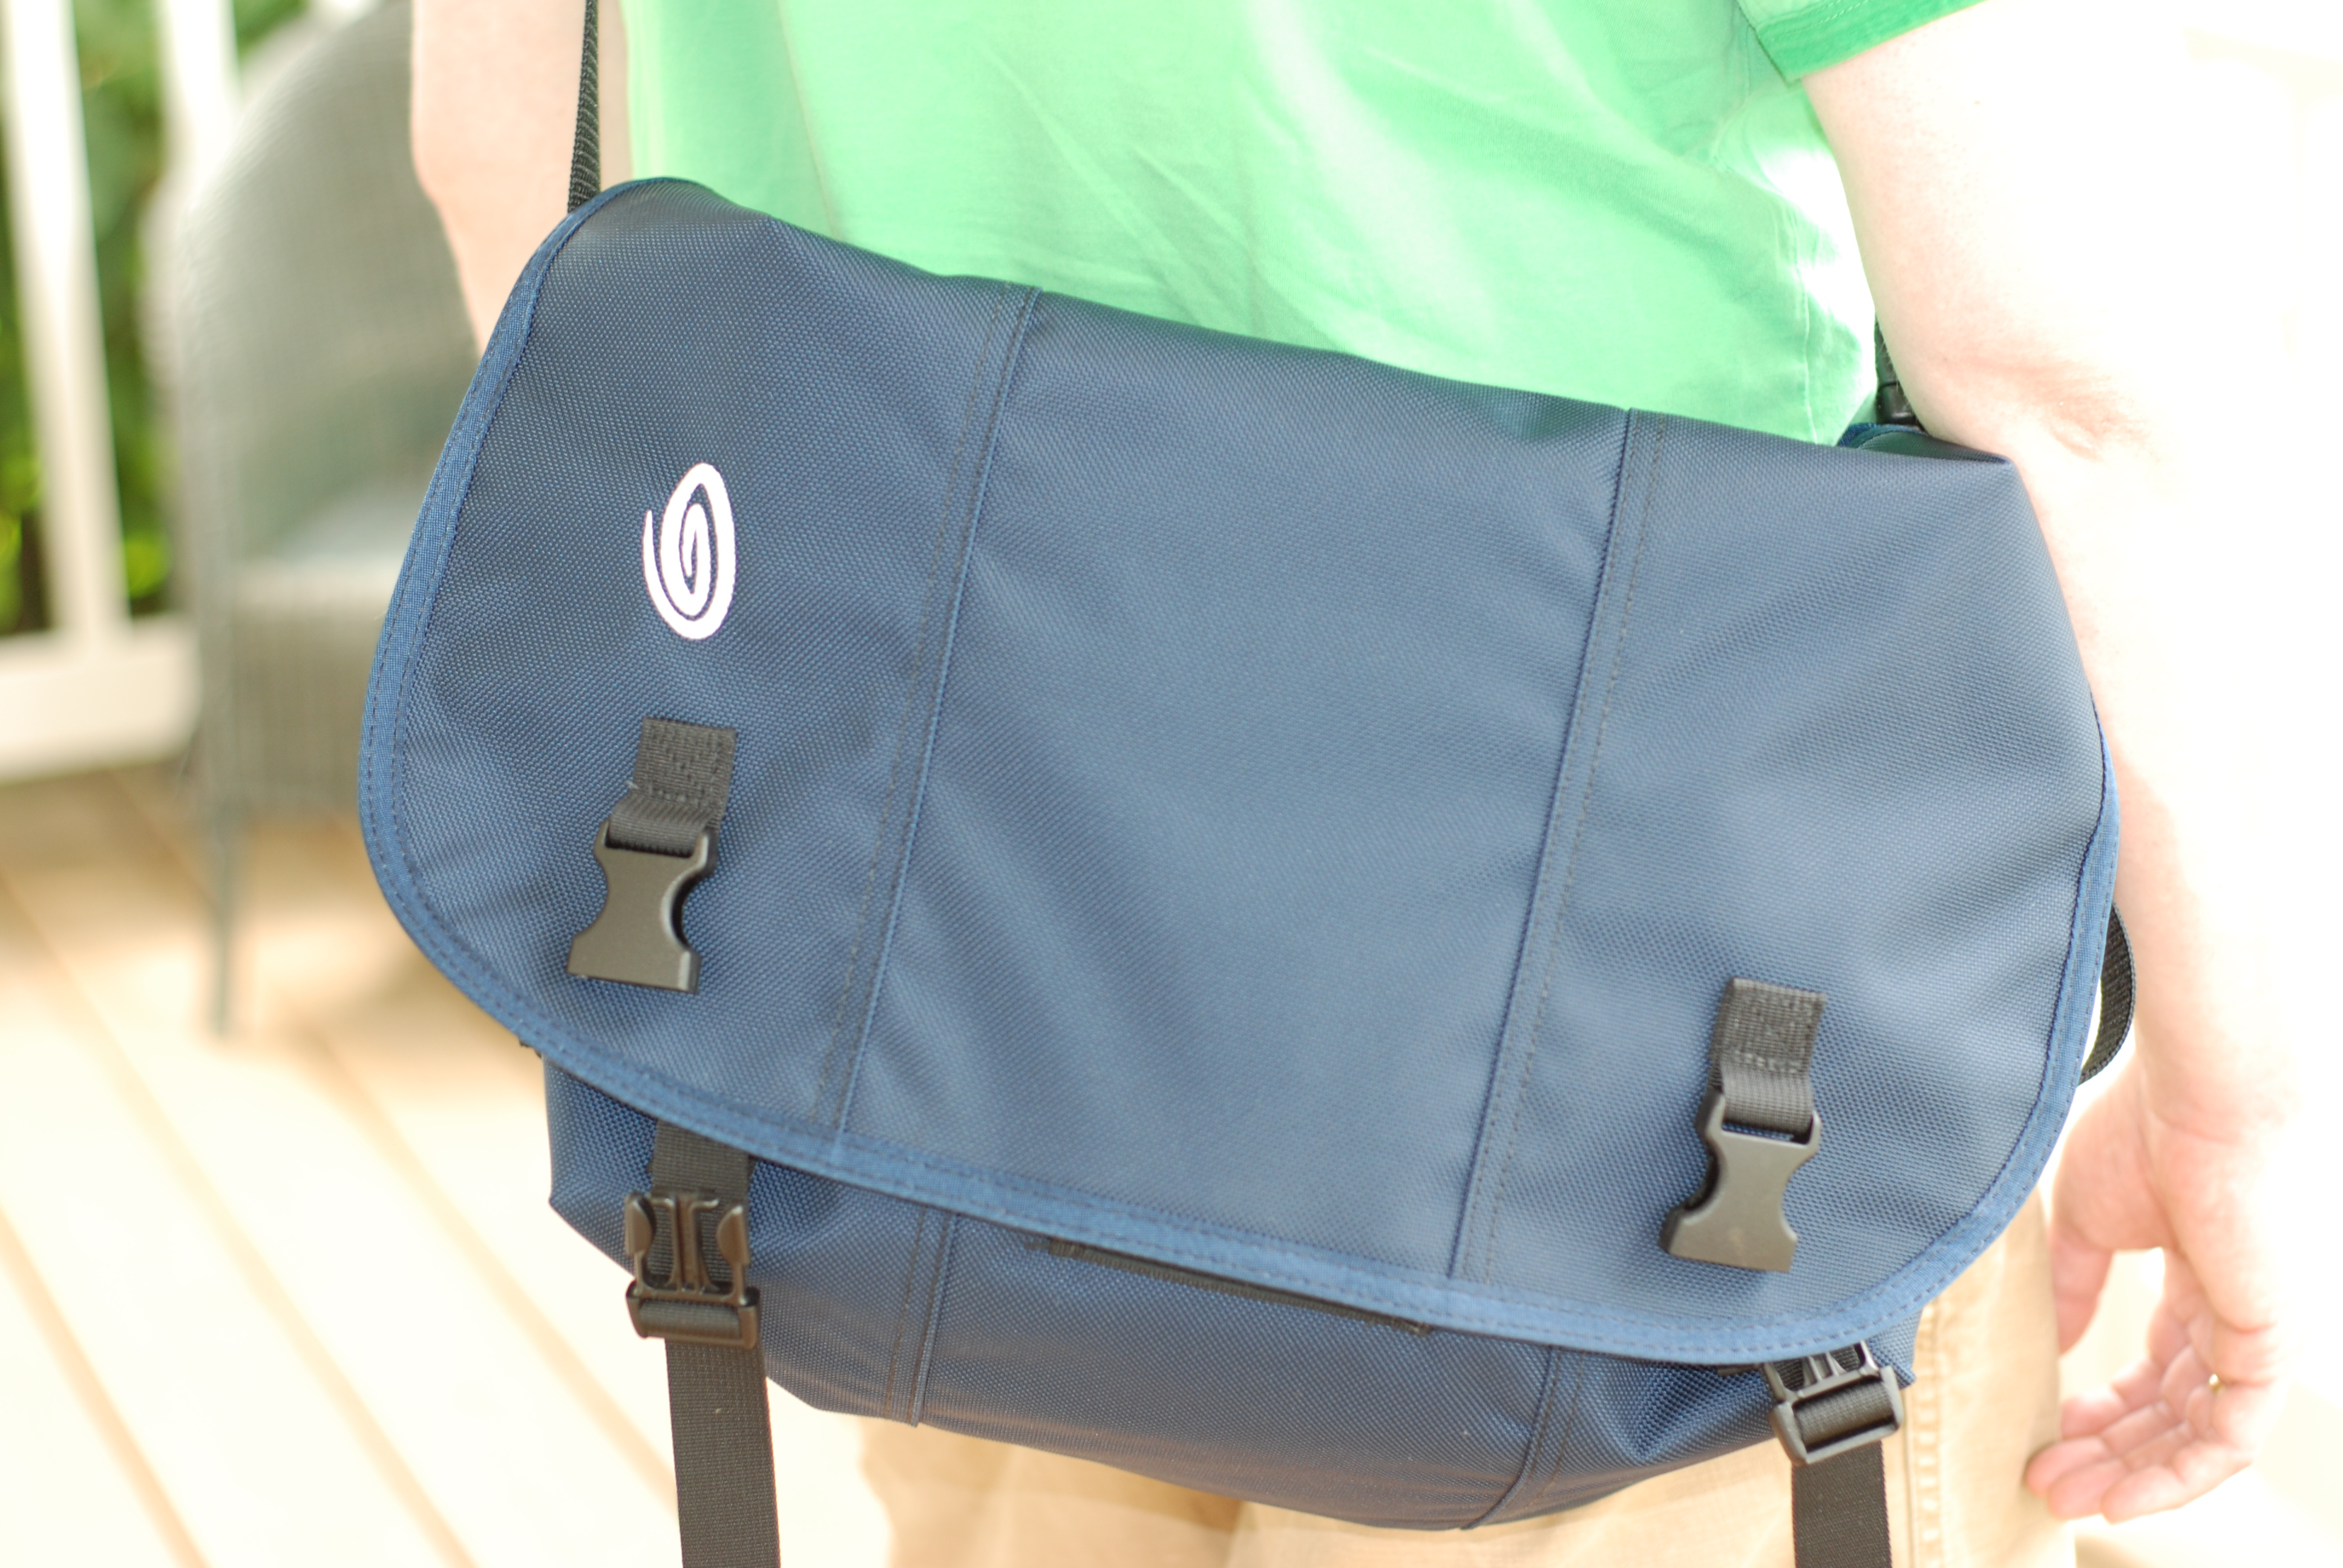 Blue/Green Timbuk2 Laptop Messenger Bag